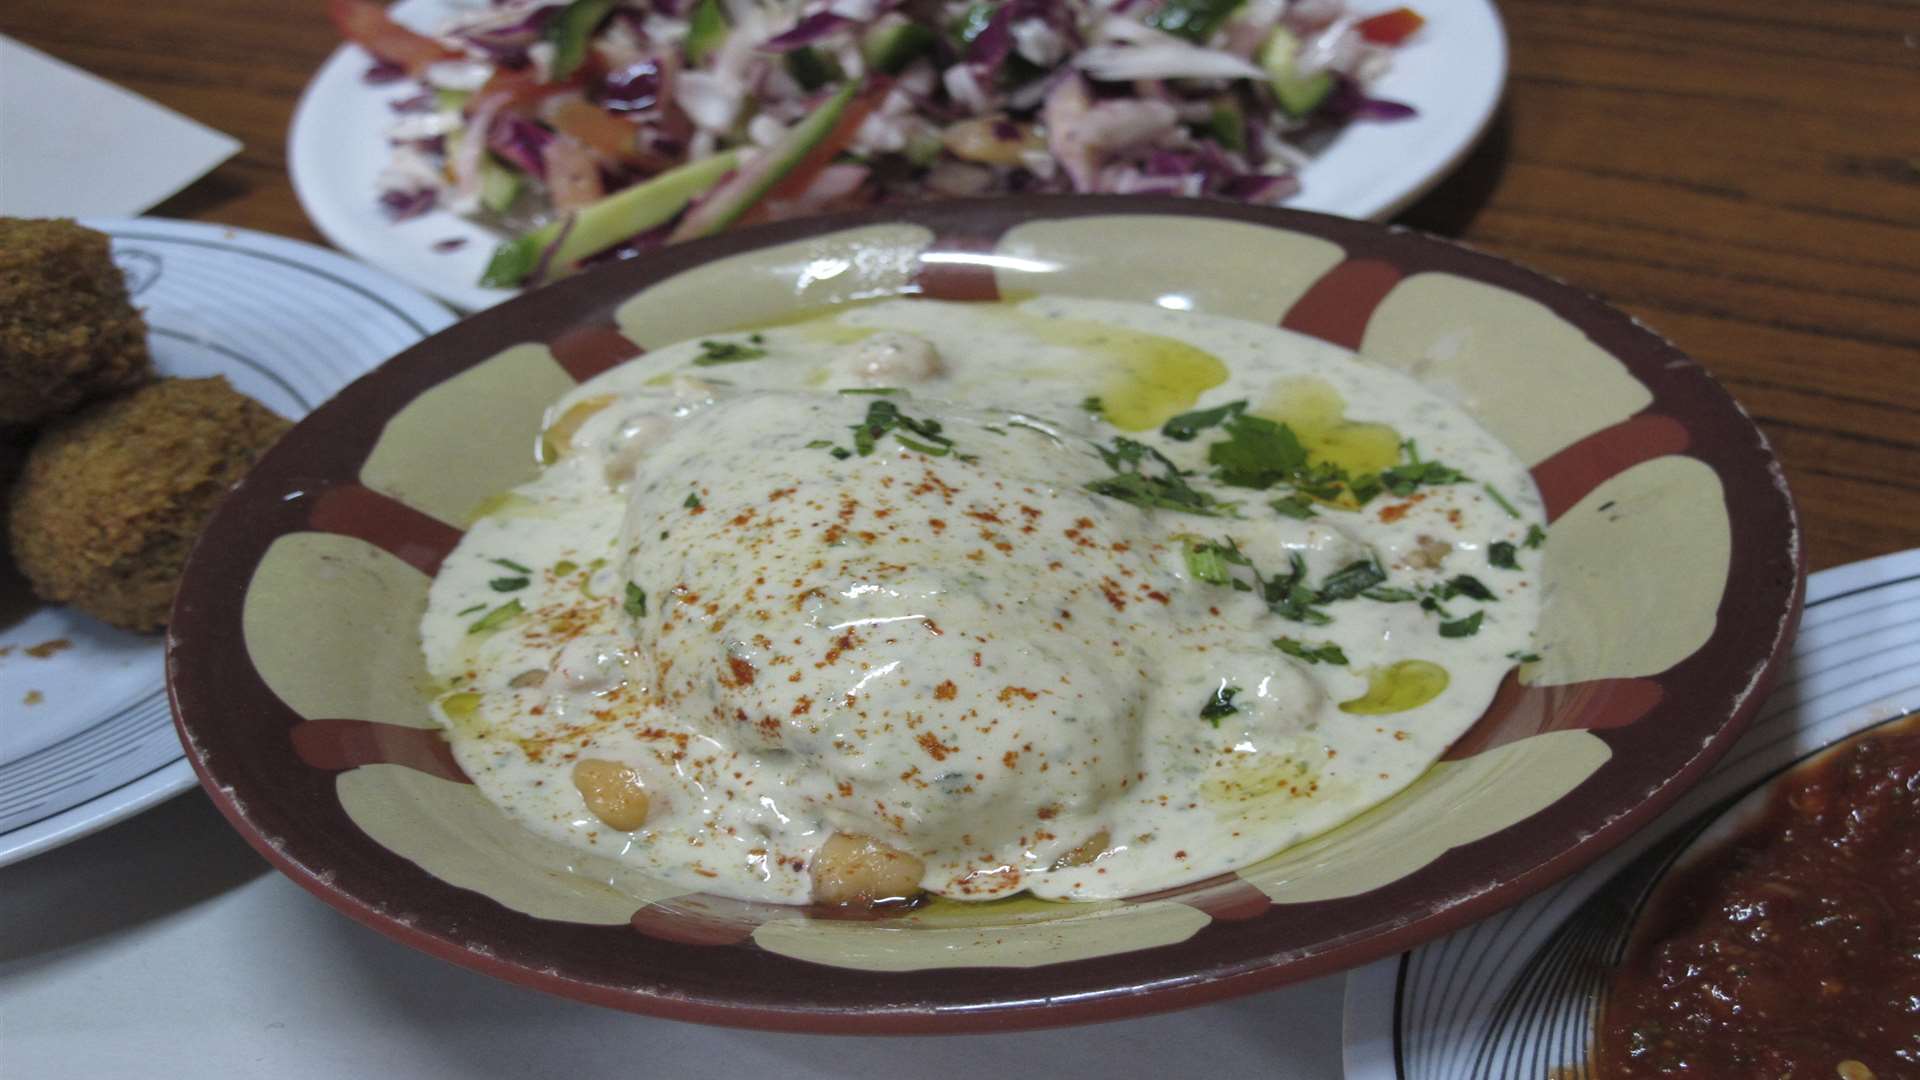 Abu Shukri Restaurant claims to make the best hummus in Jerusalem